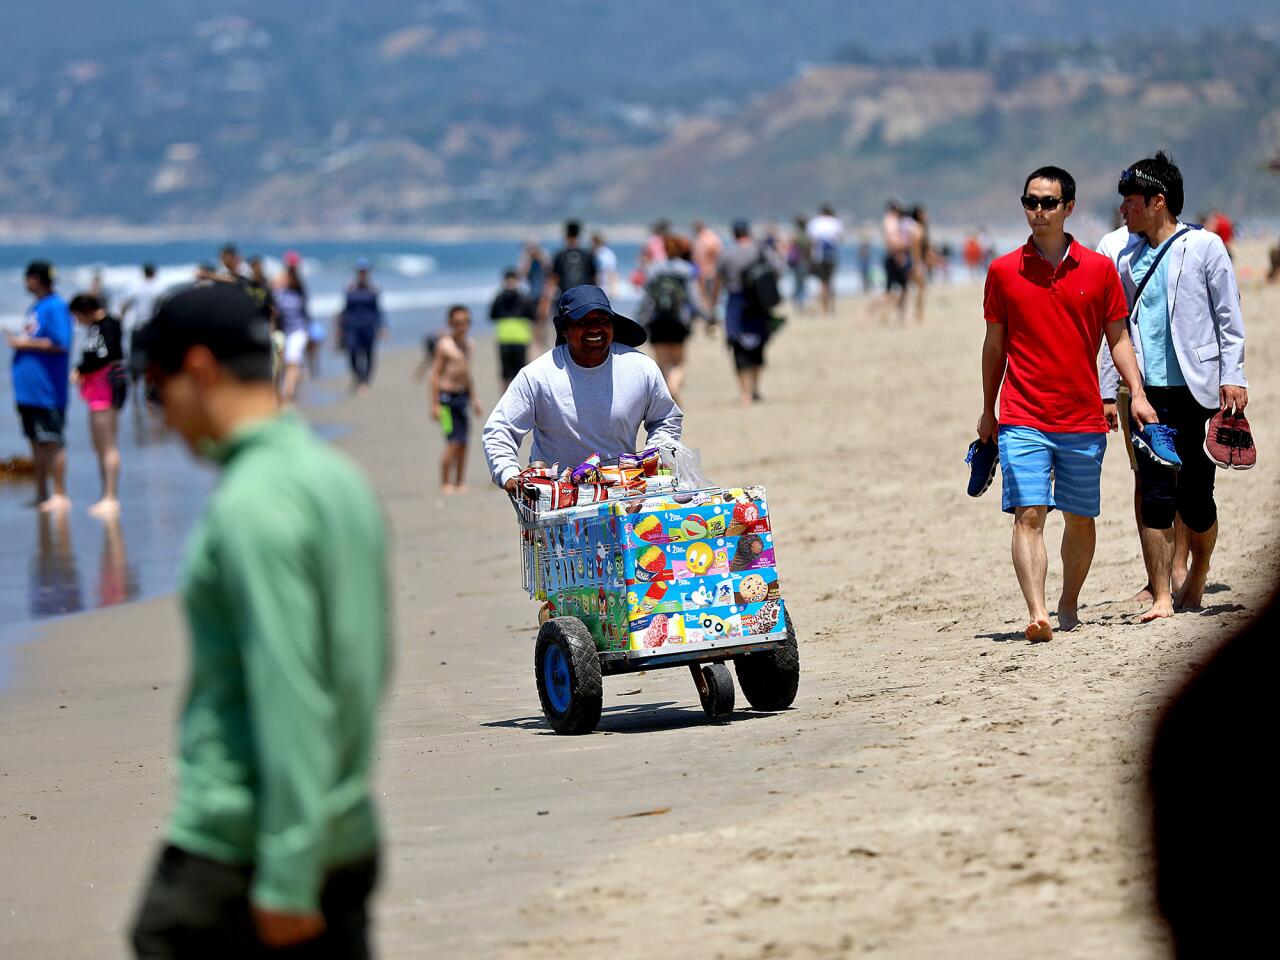 Santa Monica street vendors struggle amid new licensing rules